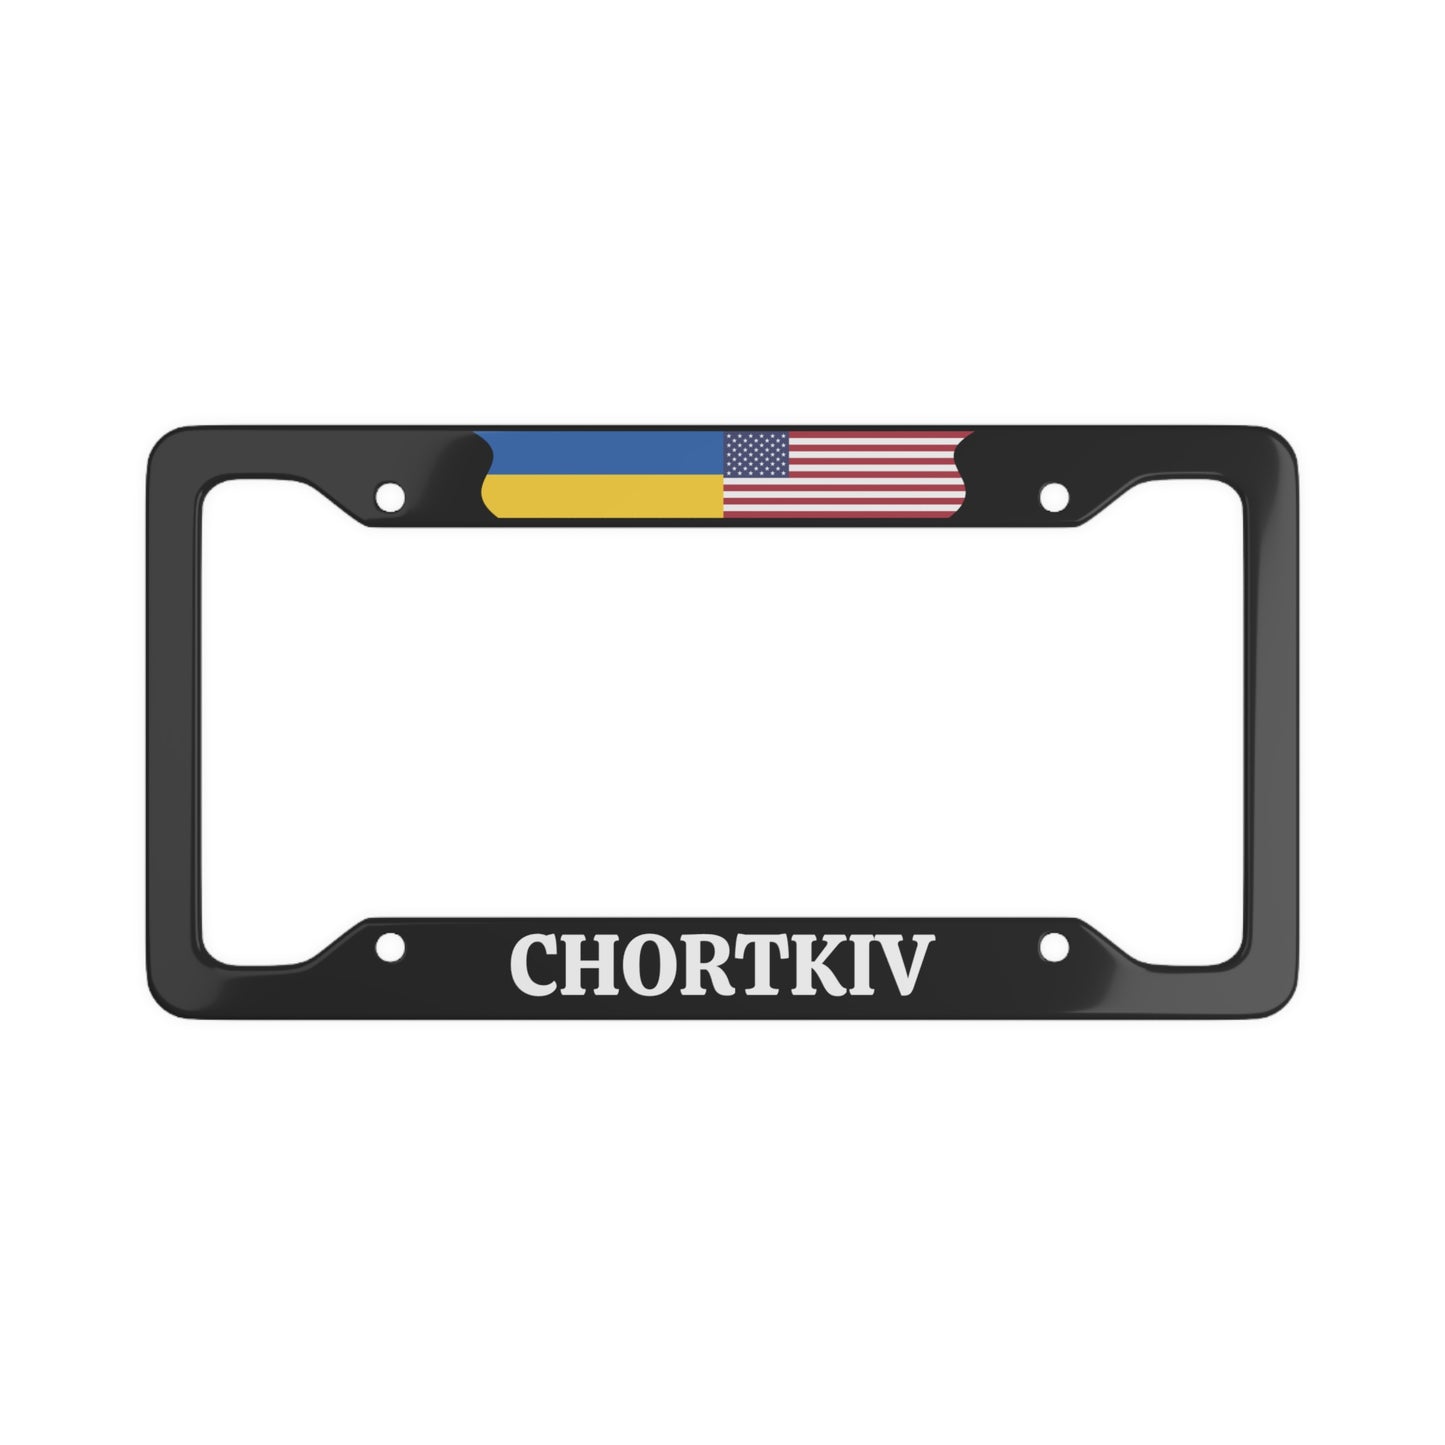 Chortkiv, Ukraine with flag License Plate Frame